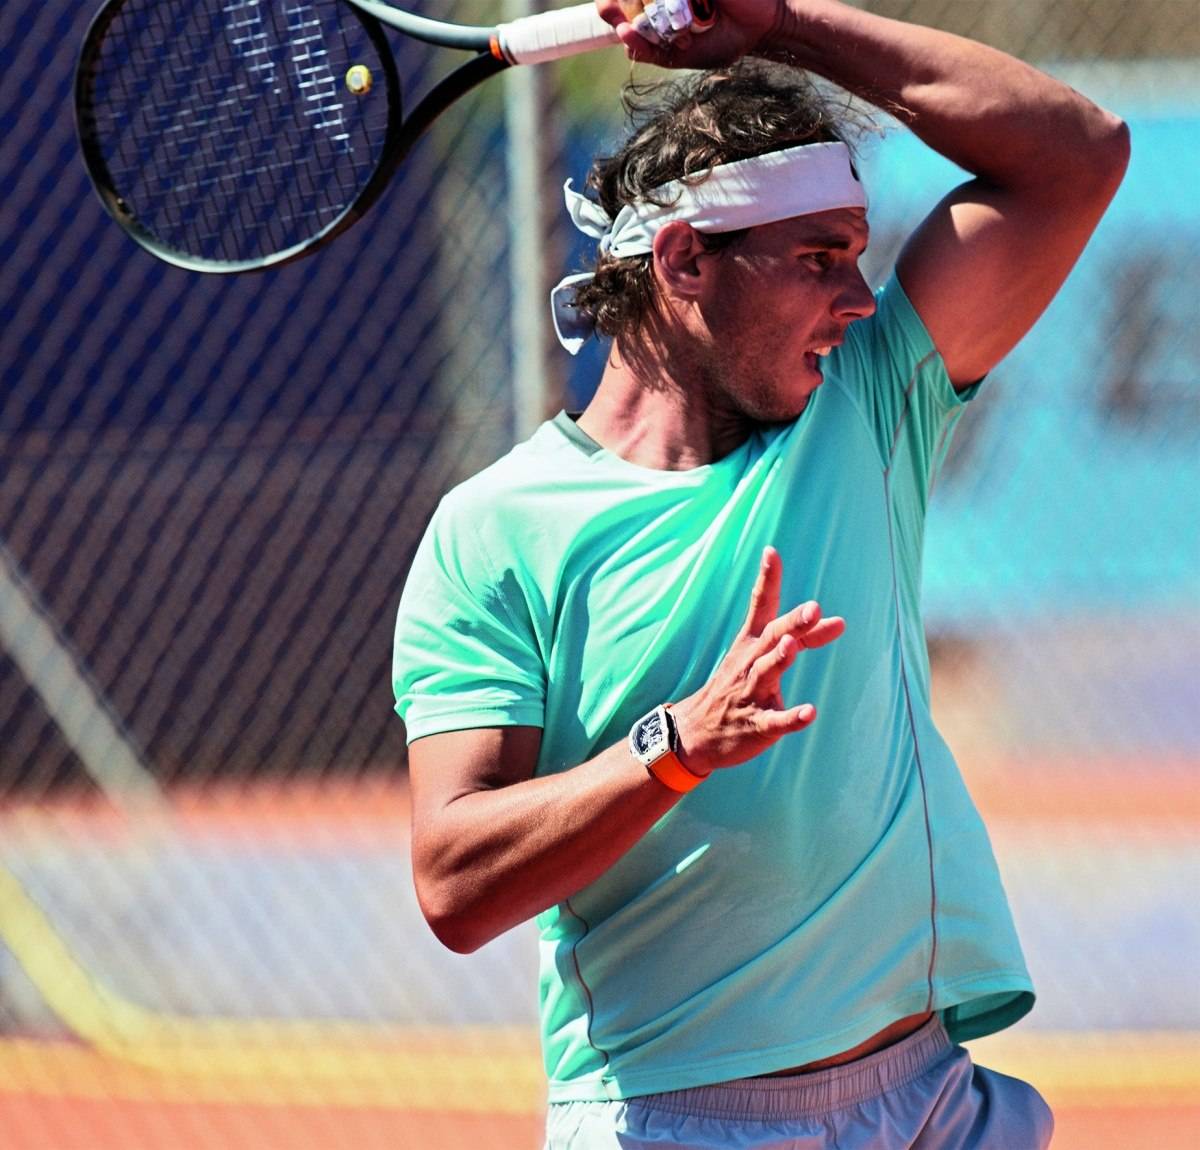 Rafael Nadal Gets New Richard Mille Watch For Roland-Garros 2015